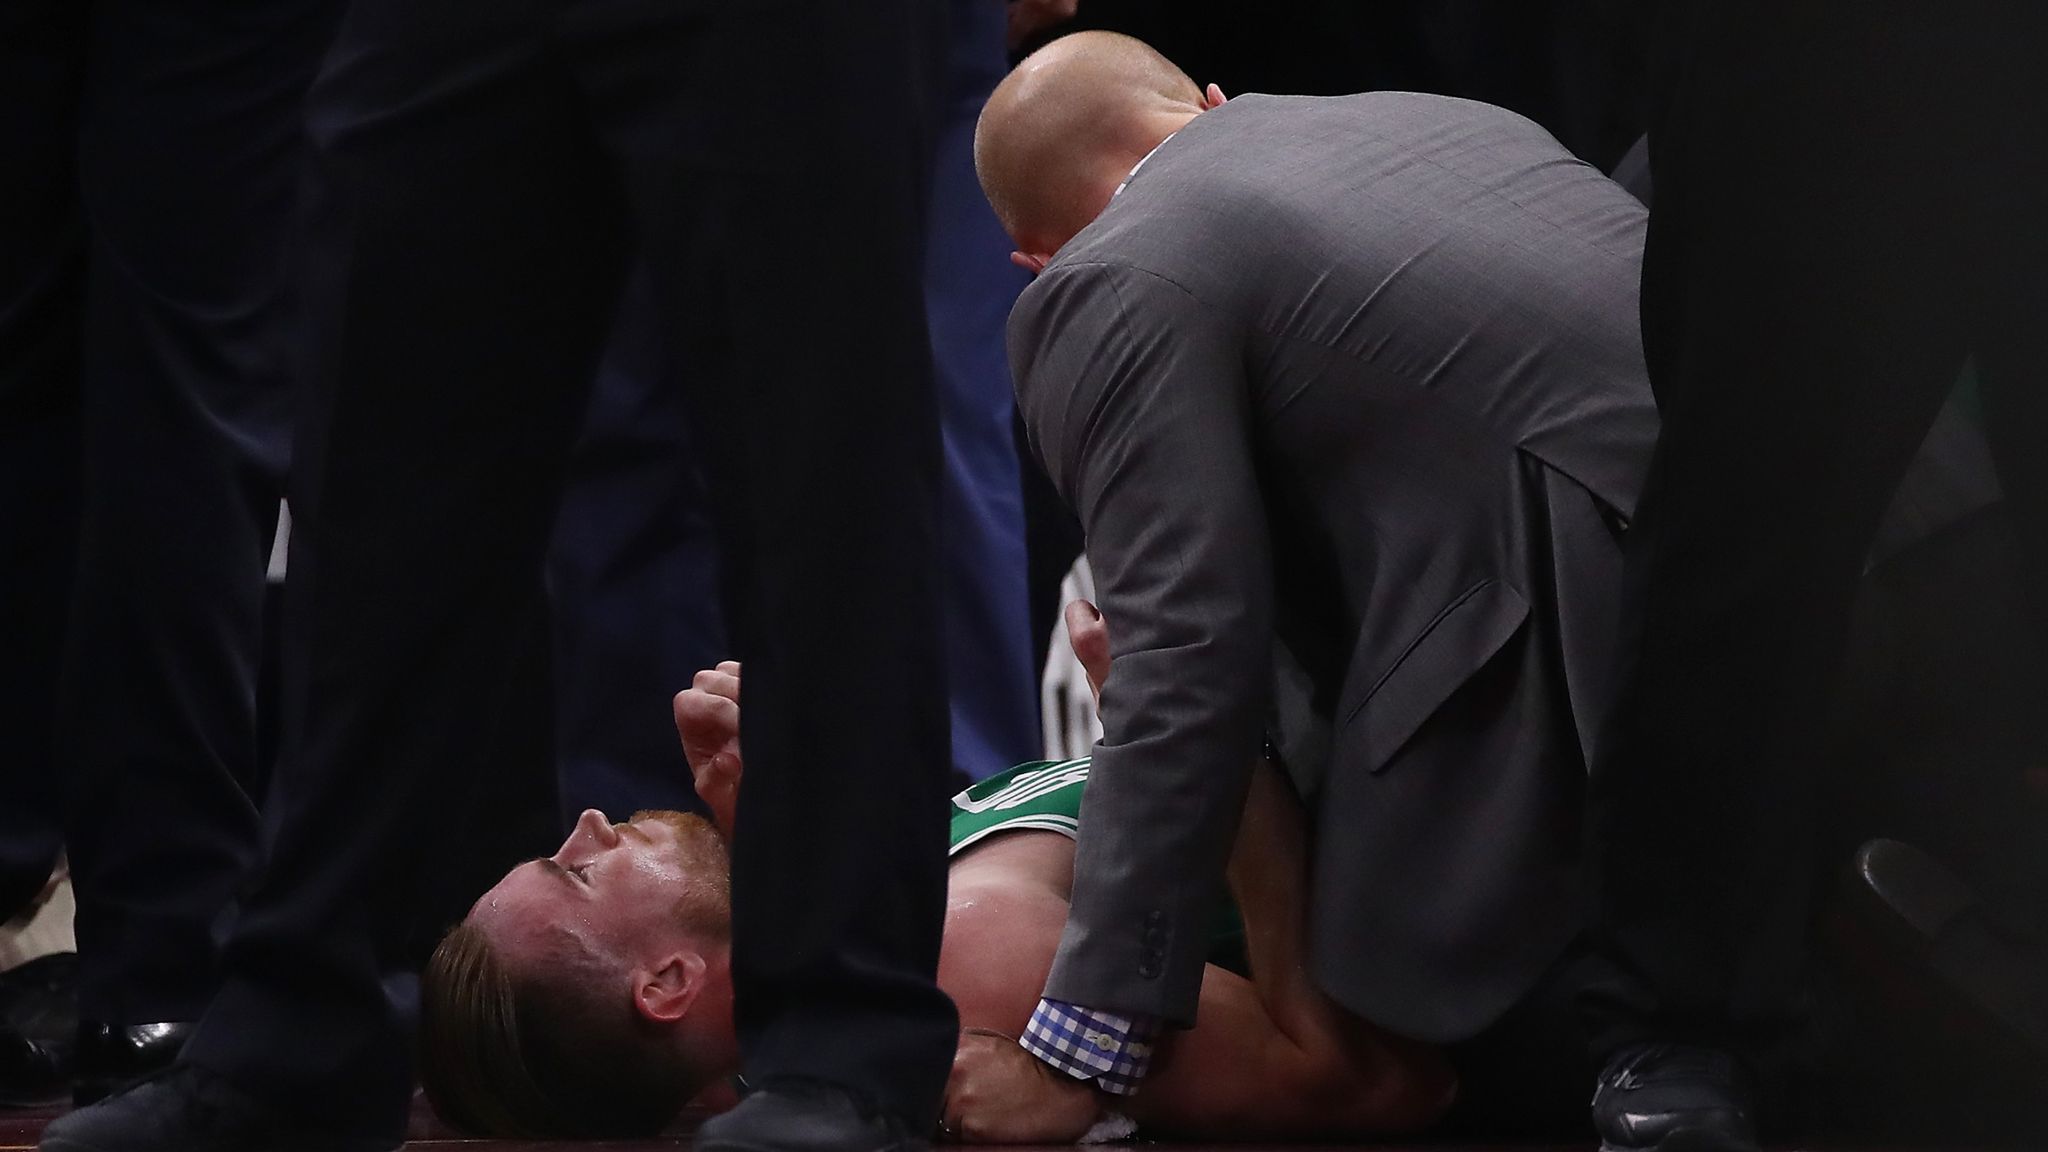 Boston Celtics' Gordon Hayward suffers fractured ankle in season opener